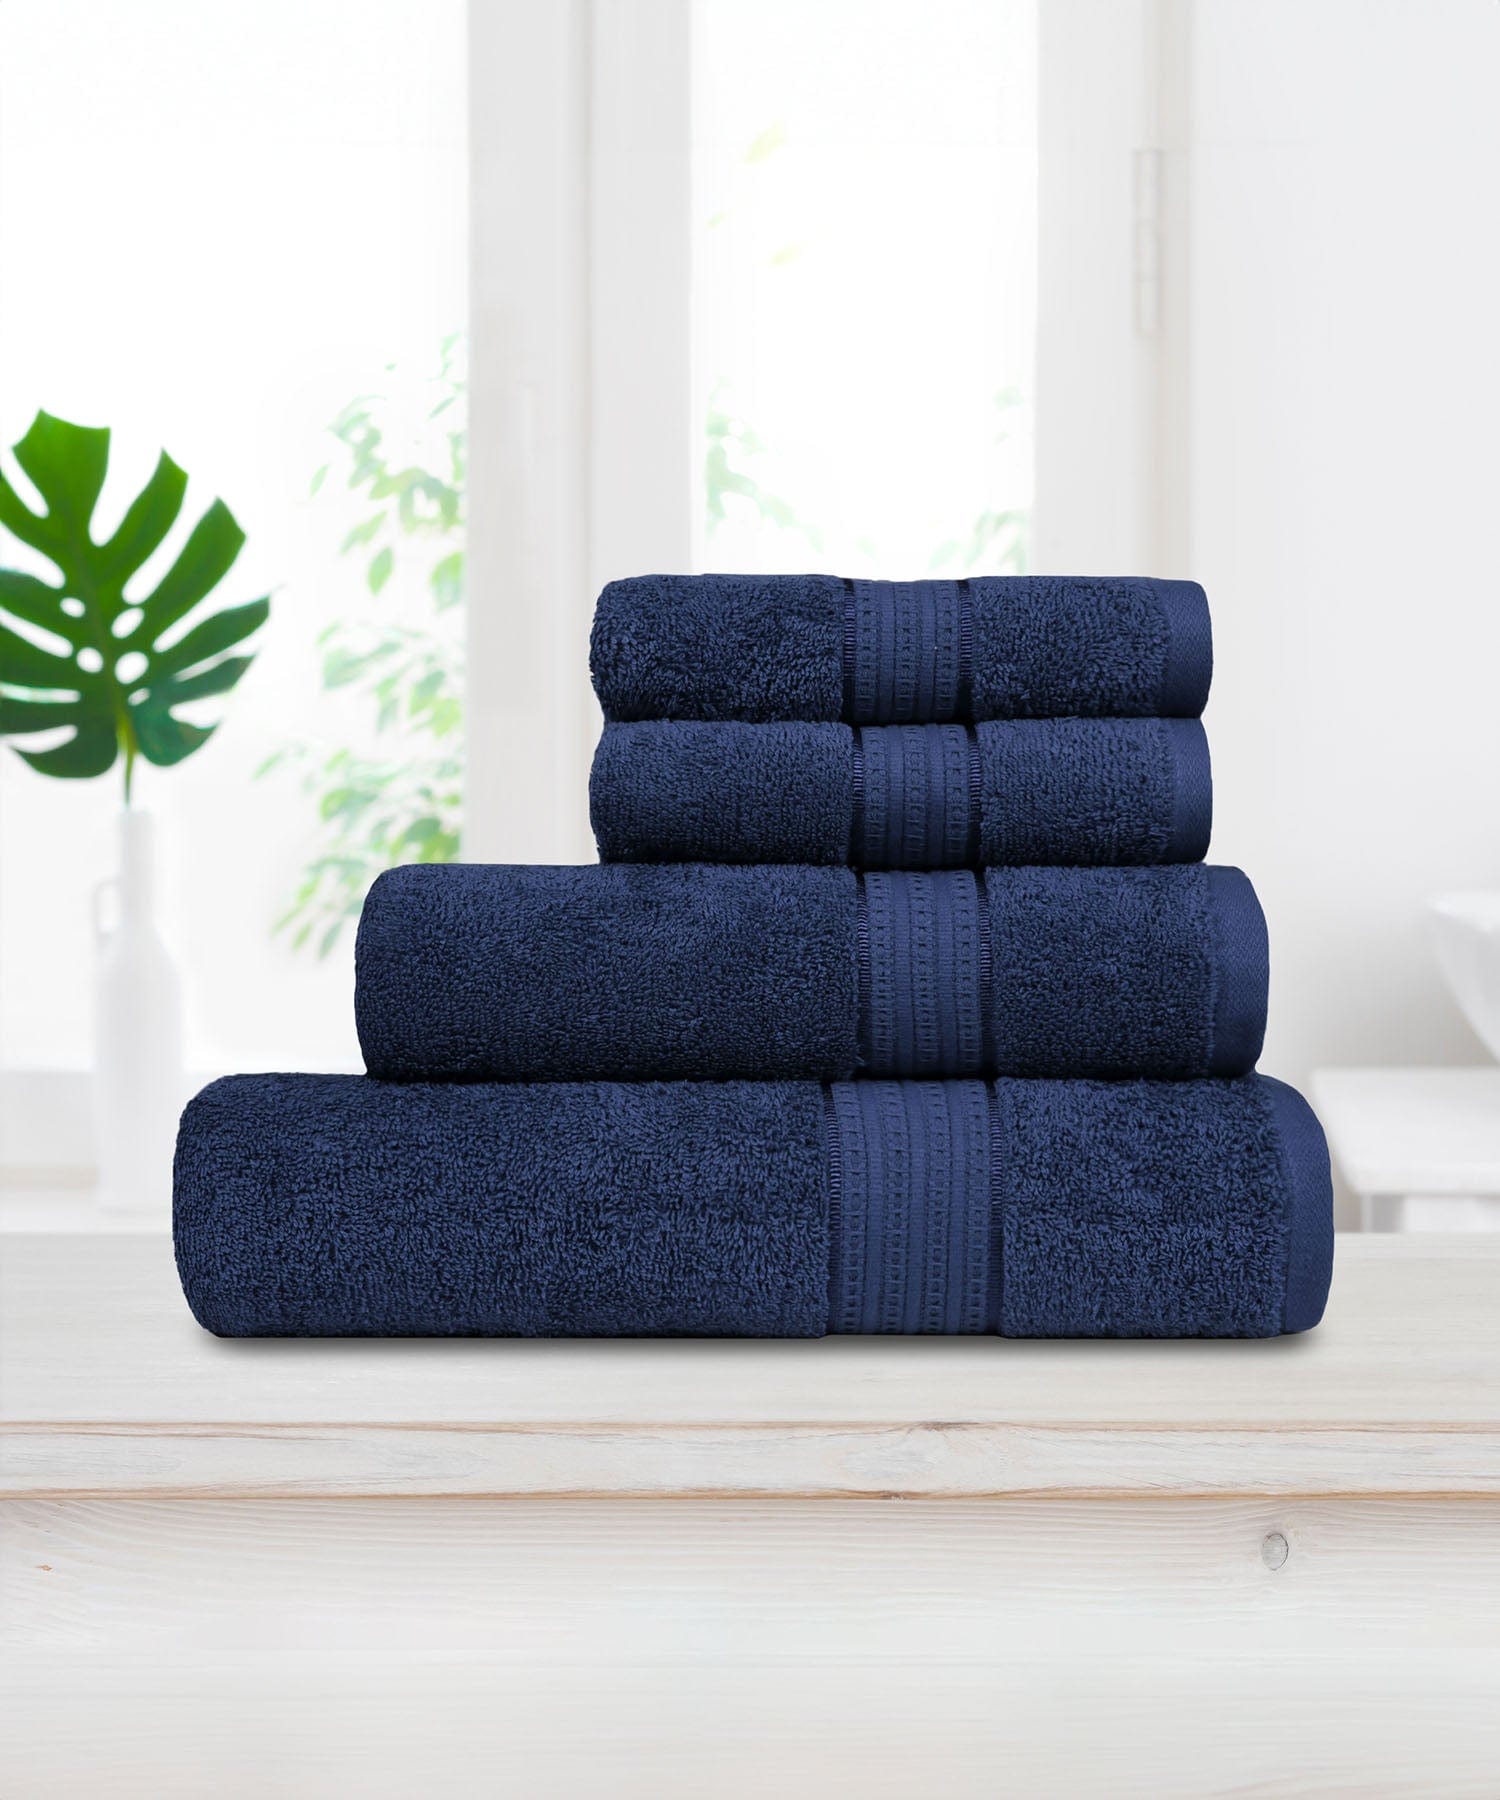 CARNIVAL TOWEL,100% Cotton,Durable,Super Soft, MIDNIGHT BLUE